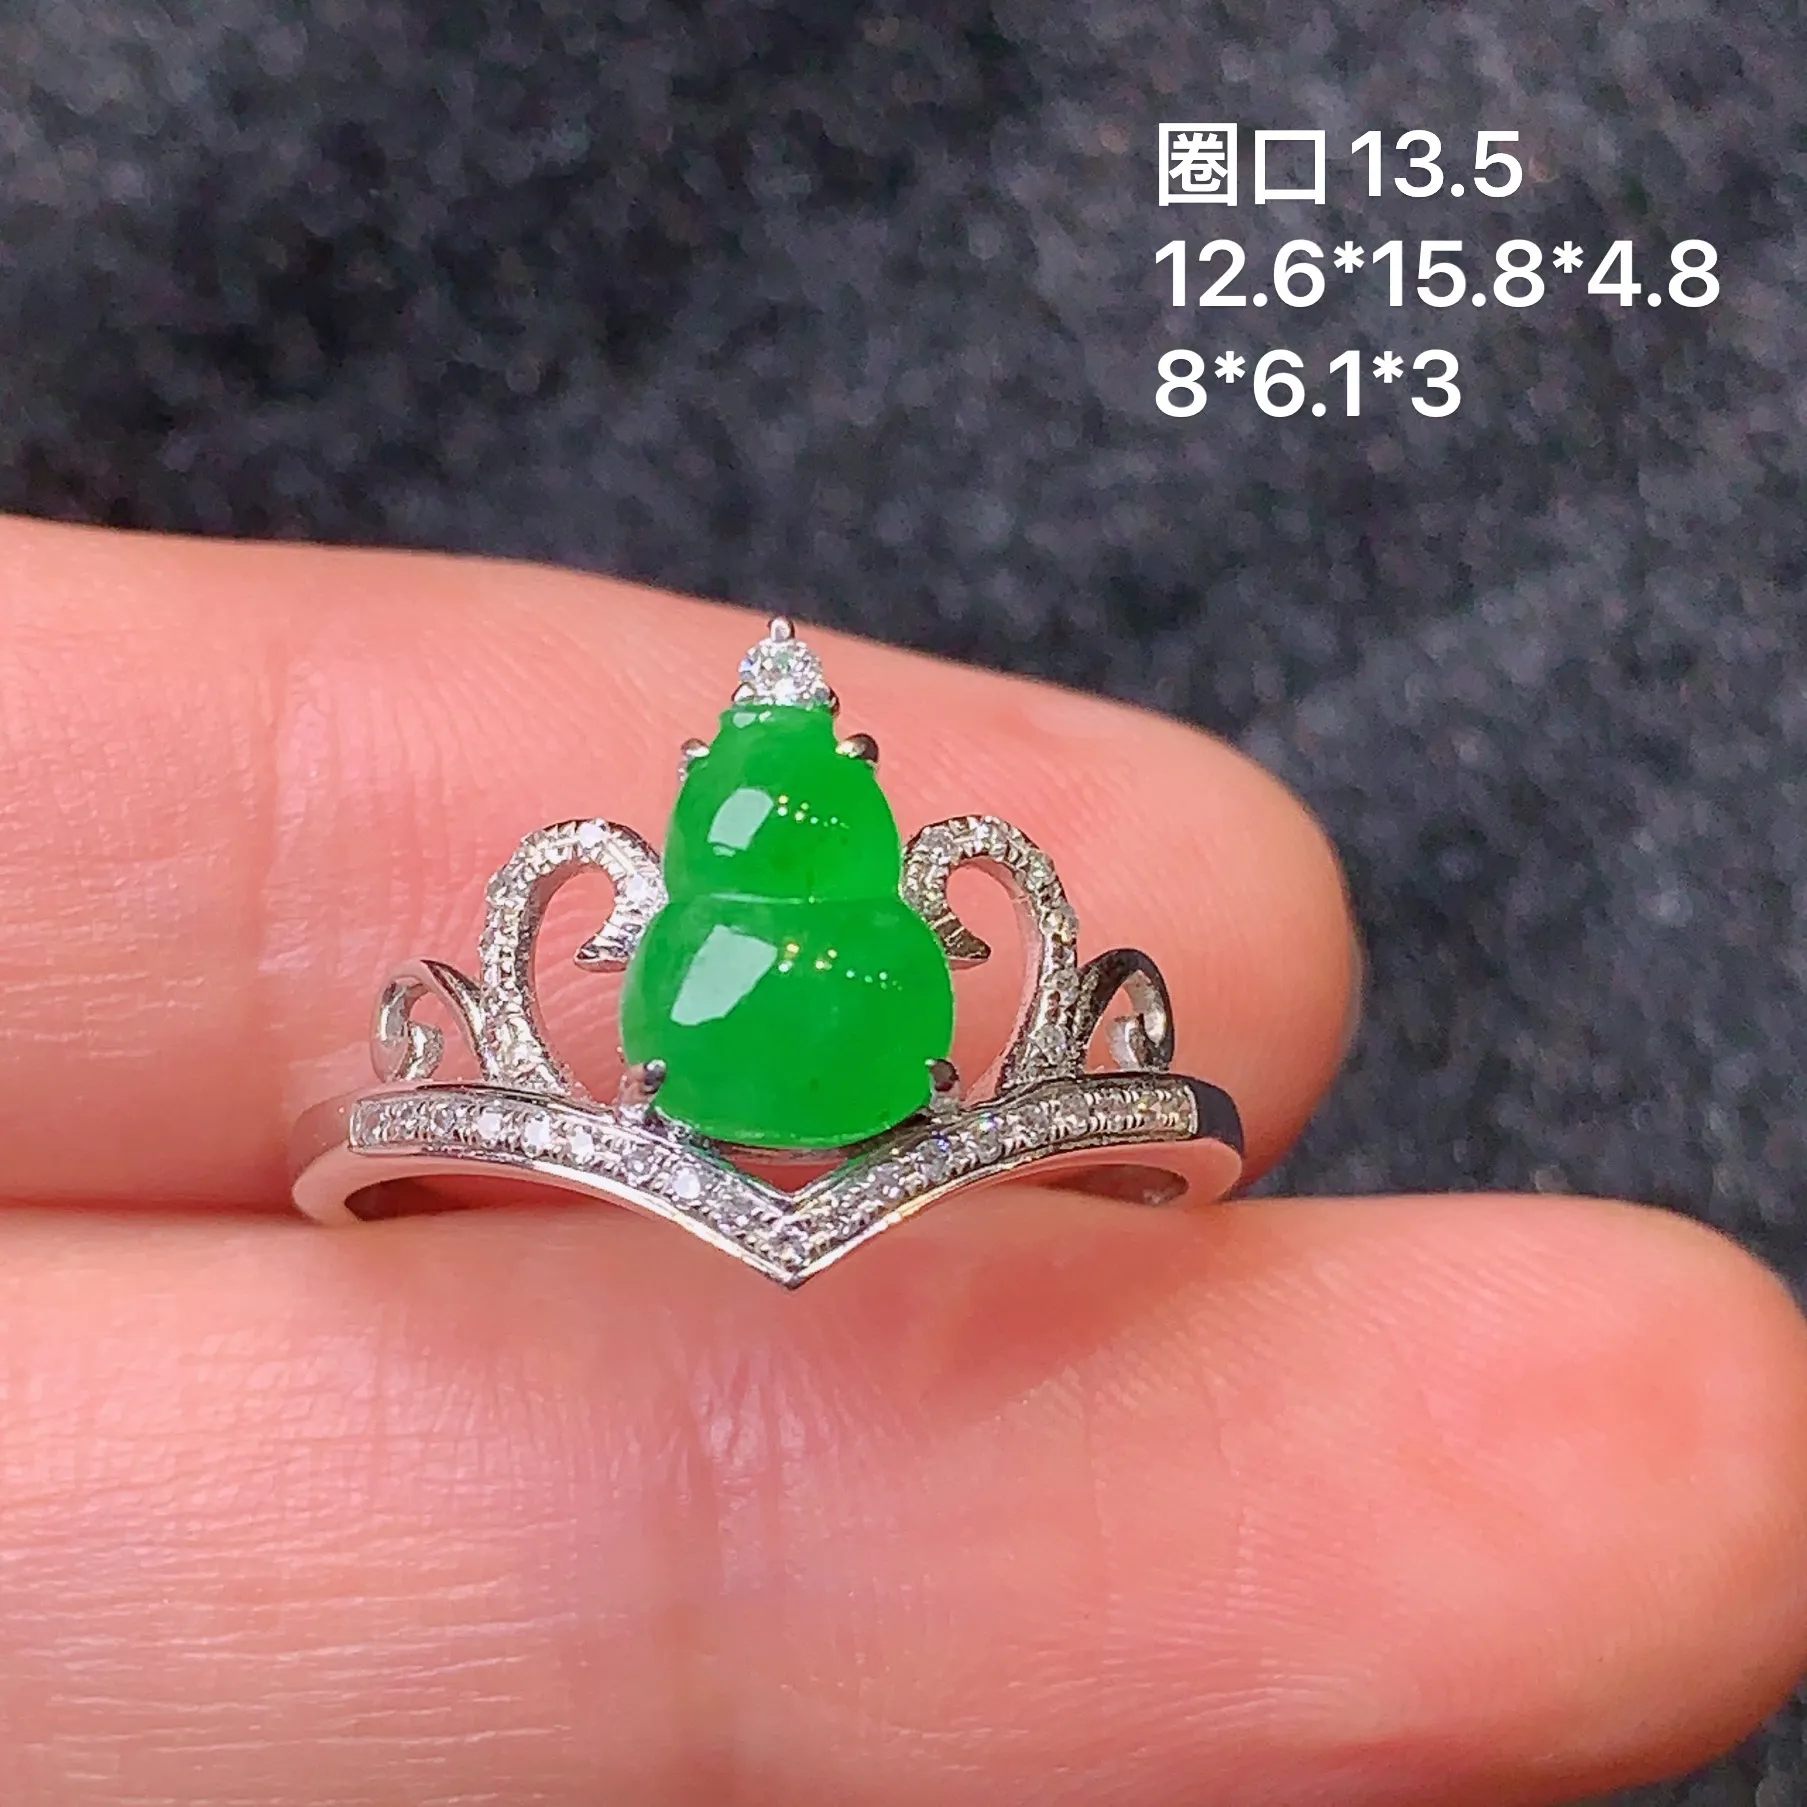 18k金钻镶嵌满绿葫芦戒指 玉质细腻 款式新颖时尚高贵优雅 圈口13.5 整体尺寸12.6*15.8*4.8